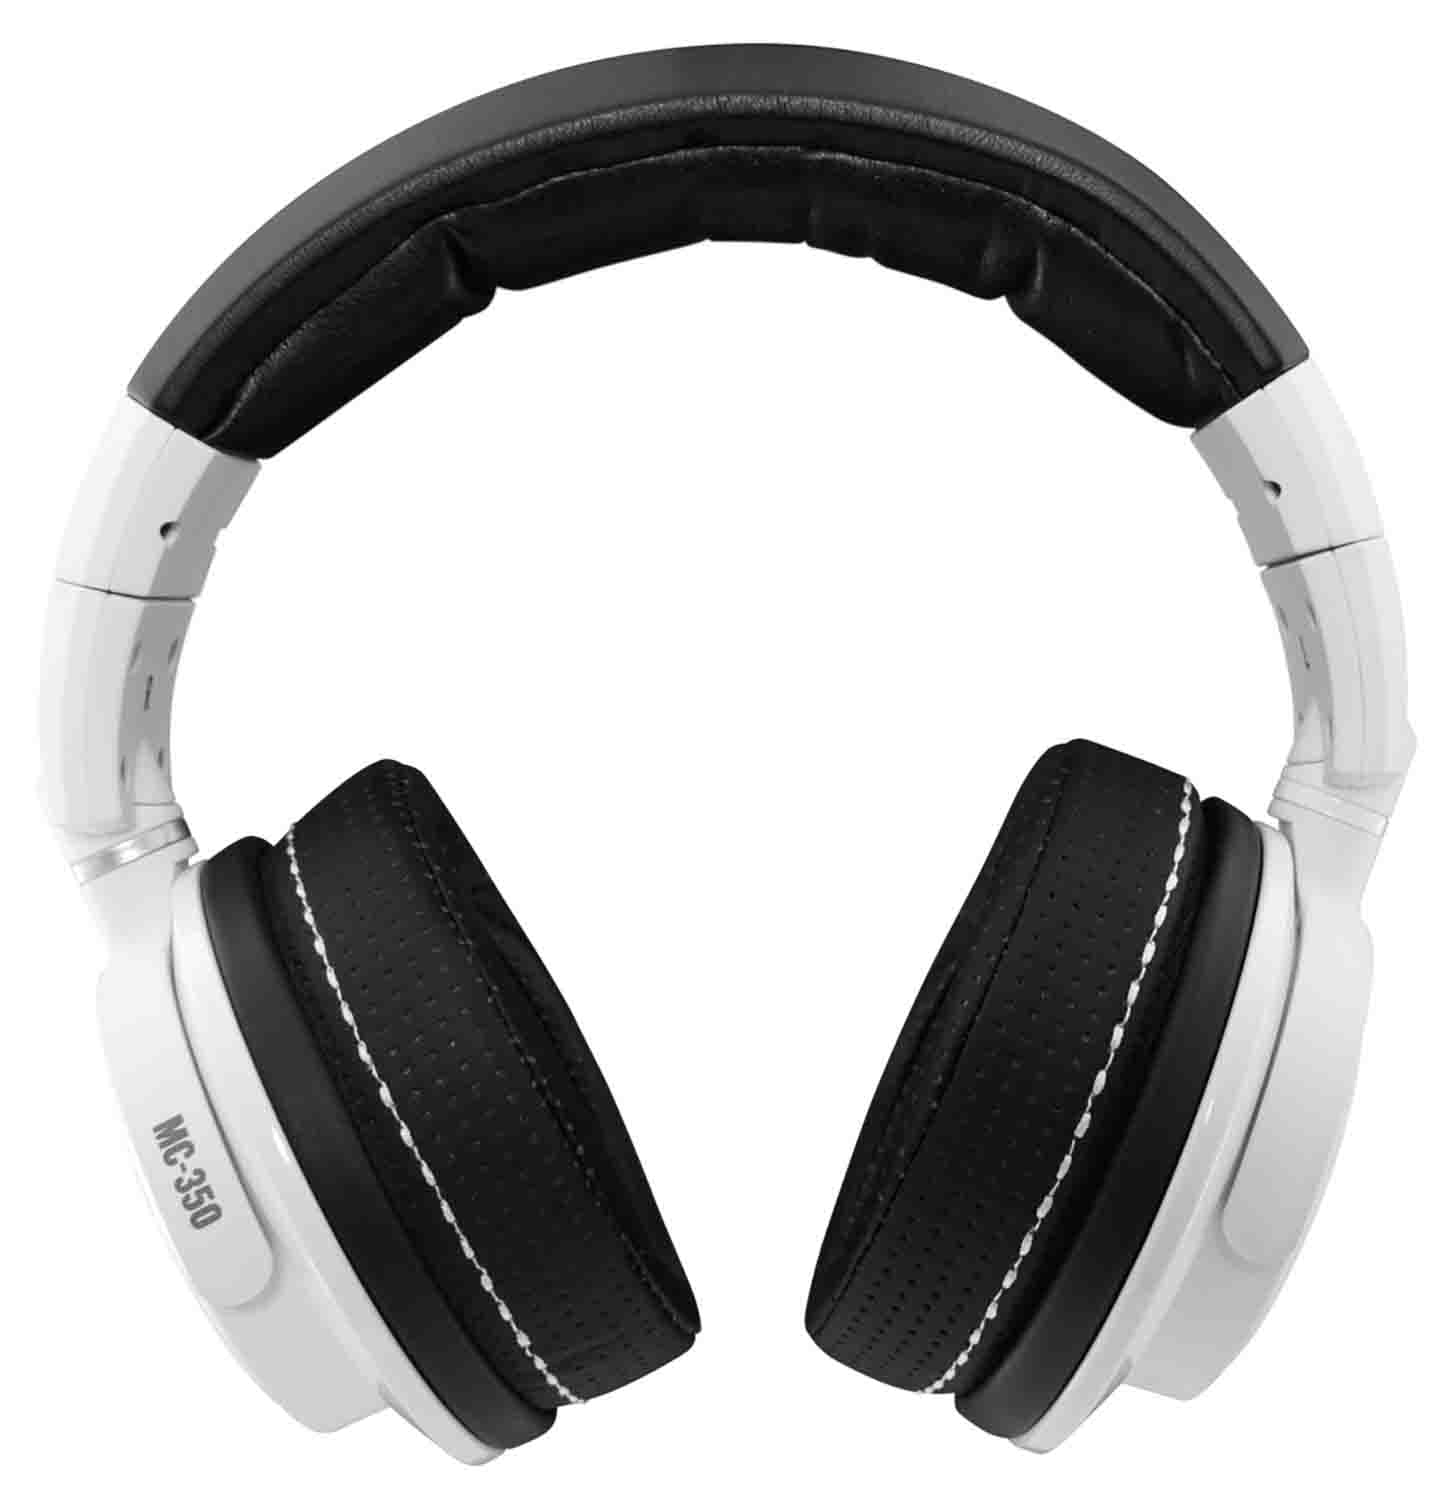 B-Stock:Mackie MC-350 Professional Closed-Back DJ Headphones - White by Mackie